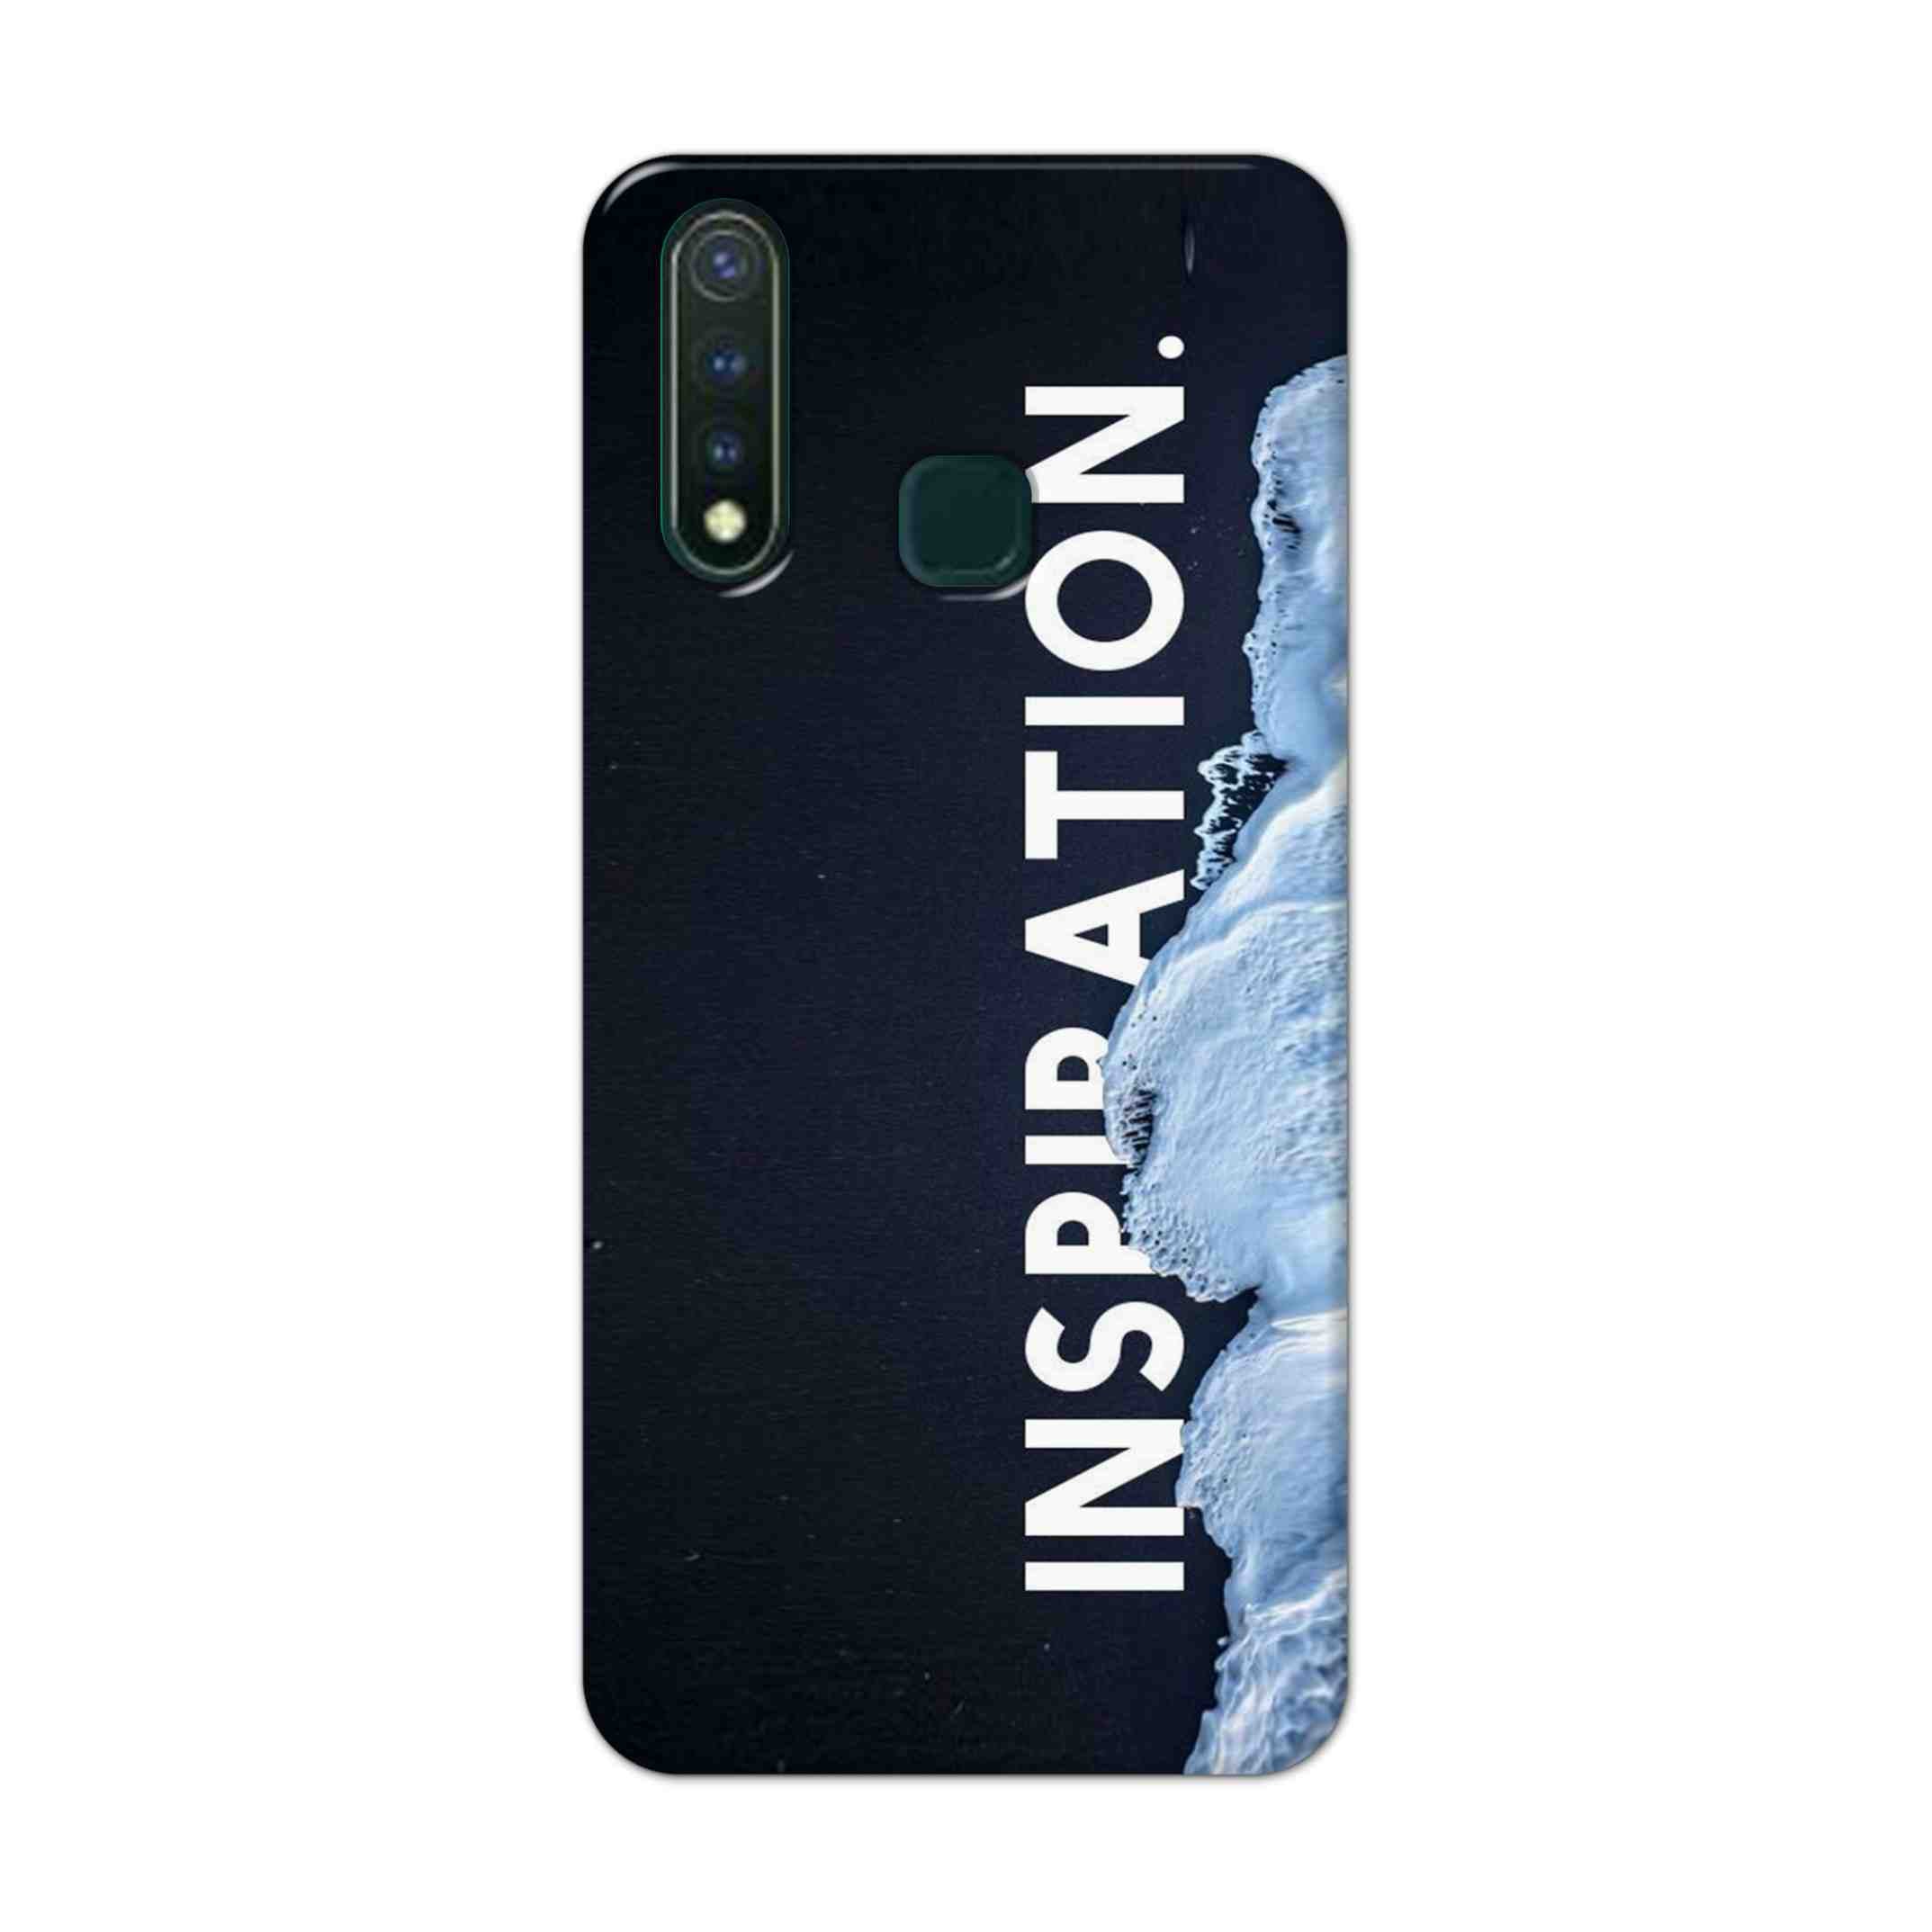 Buy Inspiration Hard Back Mobile Phone Case Cover For Vivo Y19 Online